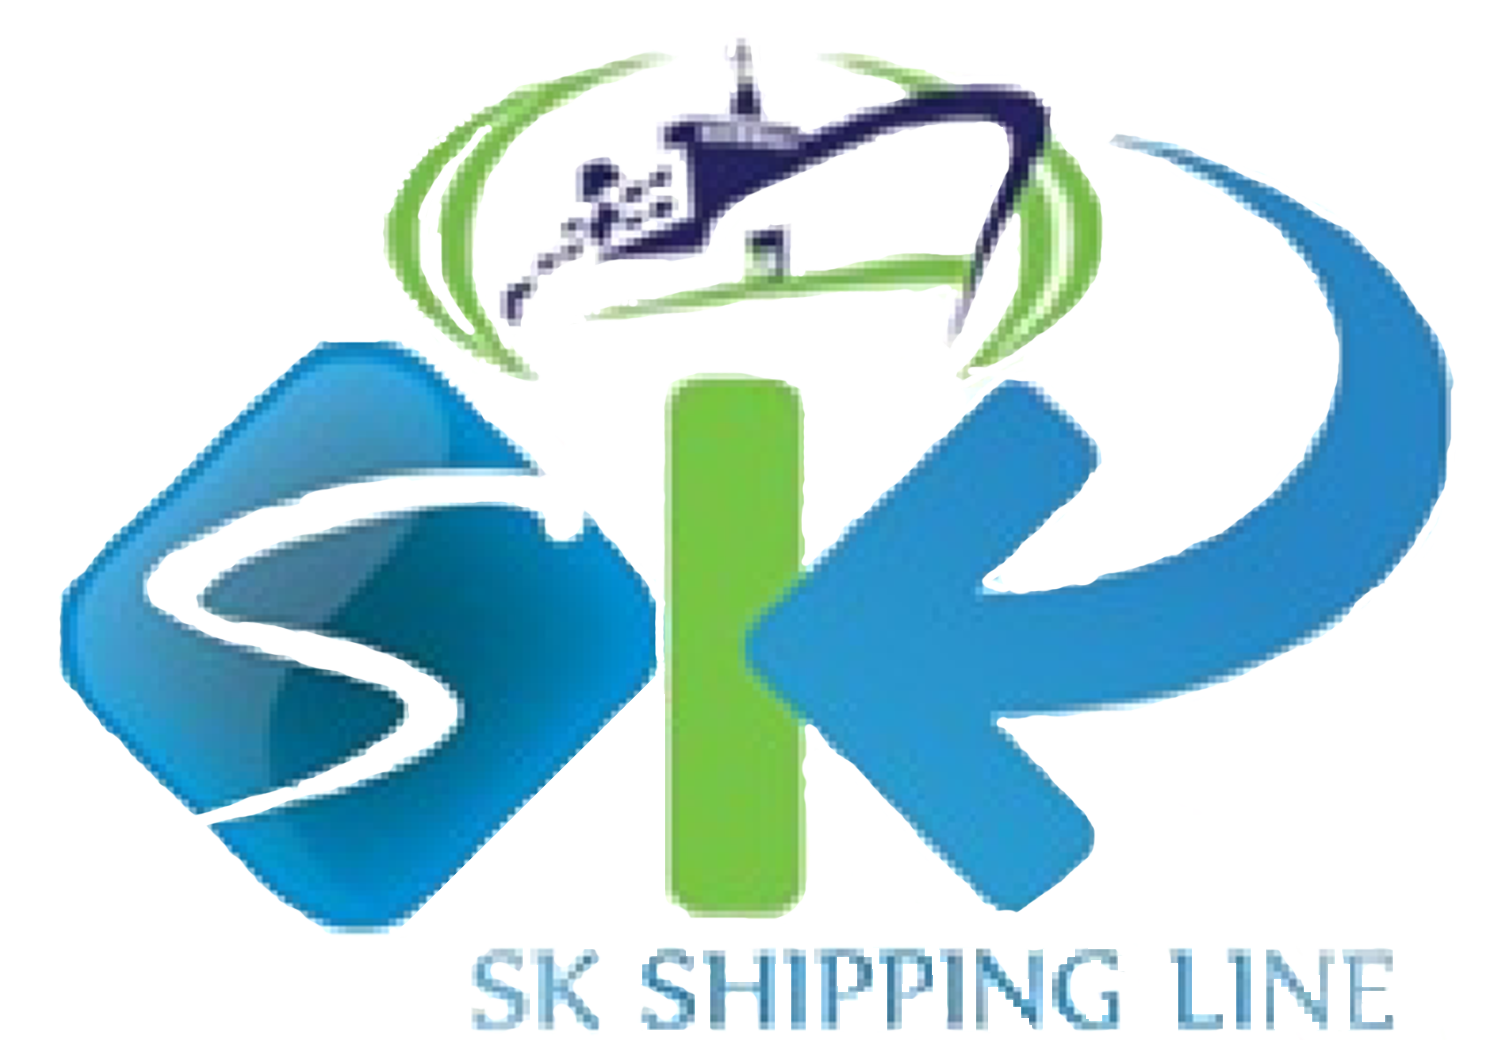 Line llc. ECON shipping line логотипы. Фрейт лайн Владивосток логотип.